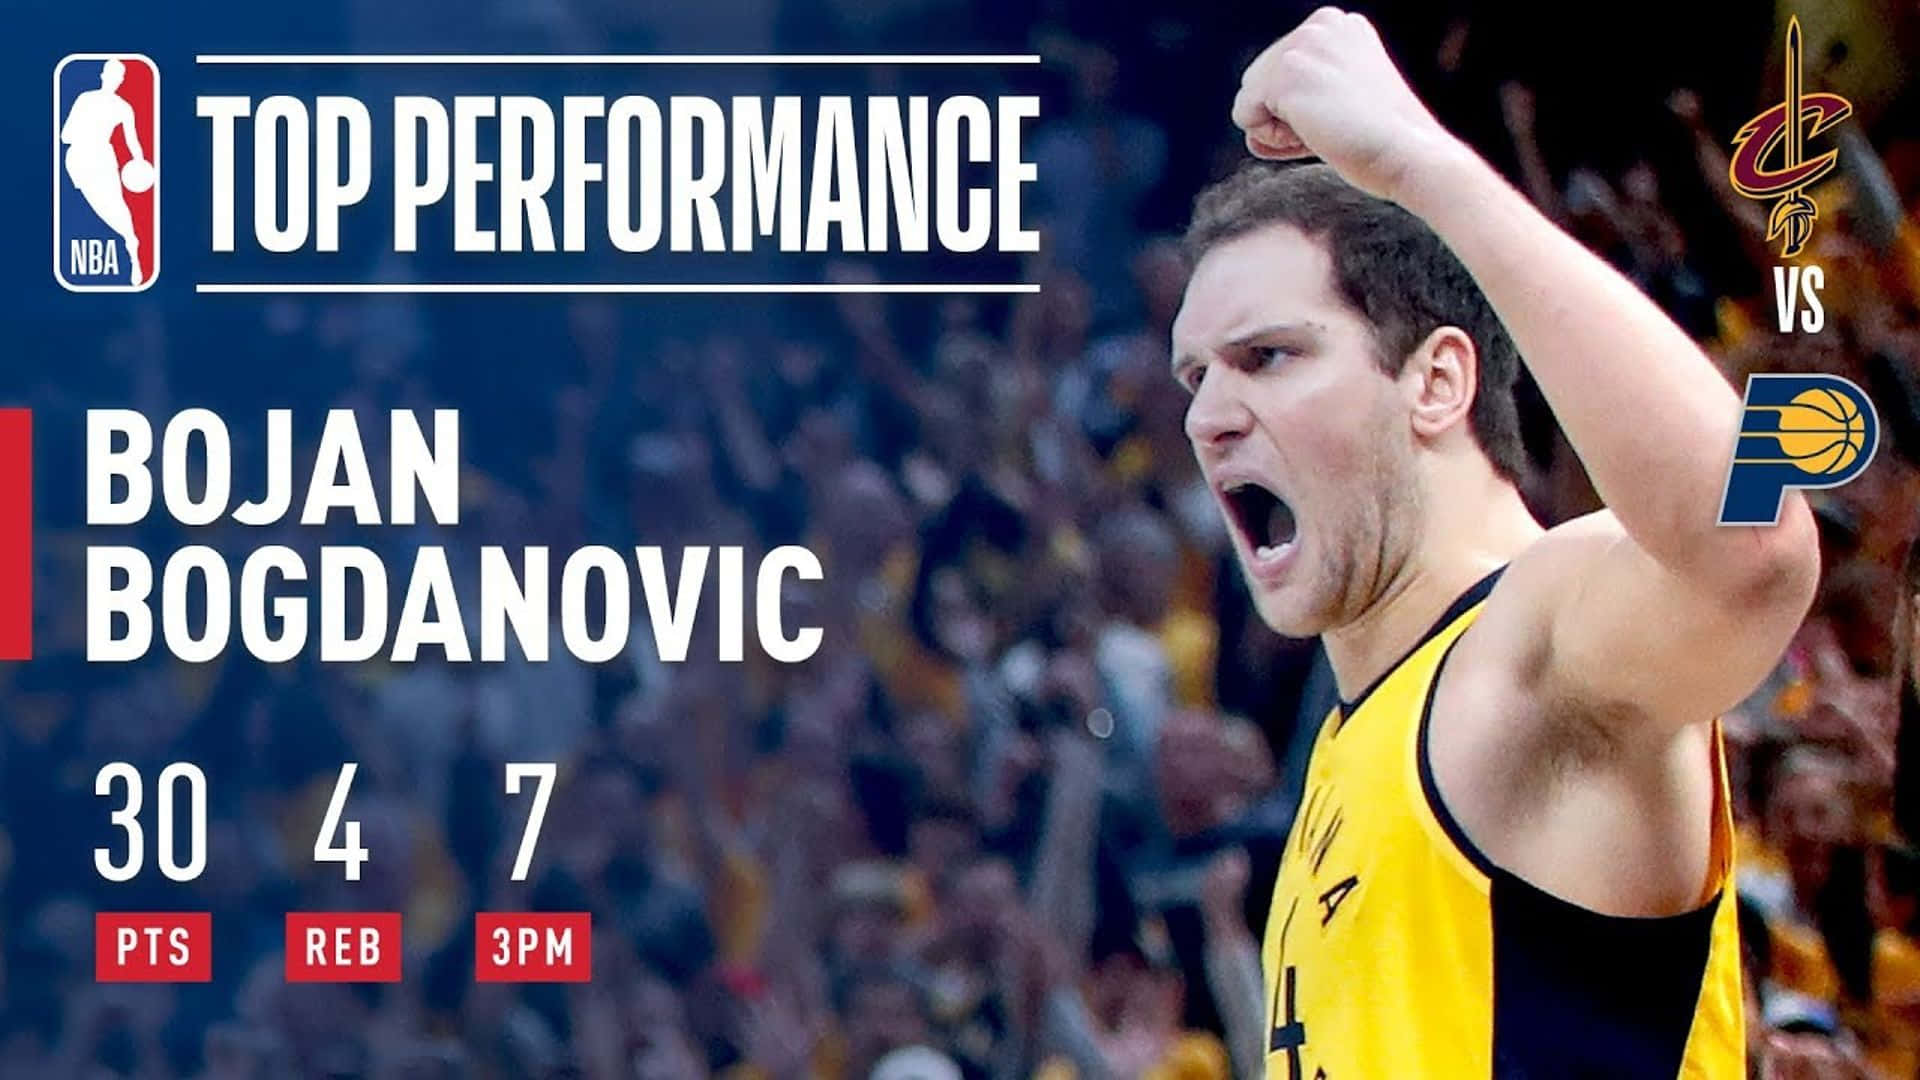 NBA Bojan Bogdanovic Performance Poster Wallpaper